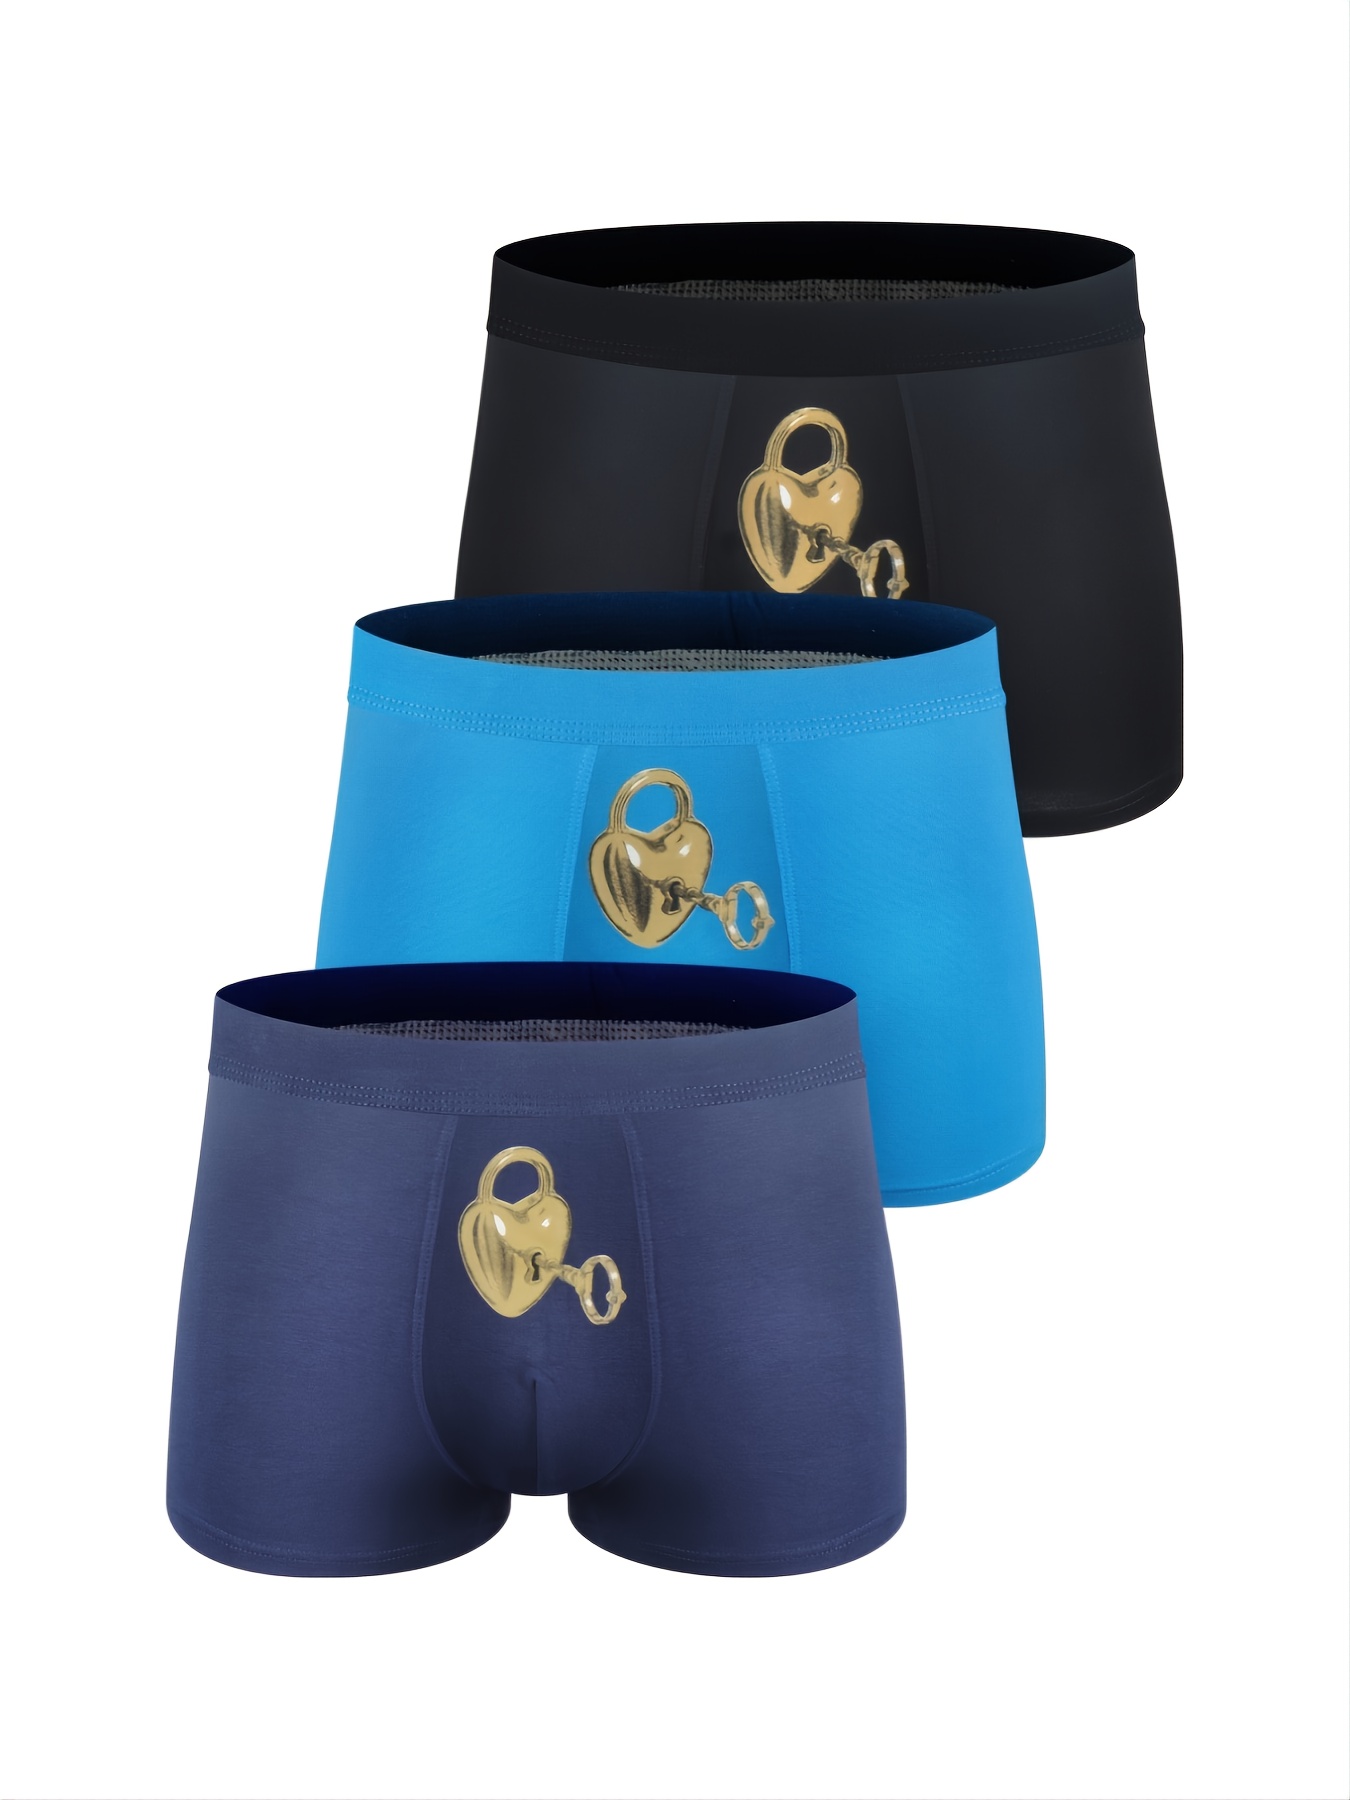 3pcs Men's Heart Lock Graphic Cotton Boxer Briefs Underwear